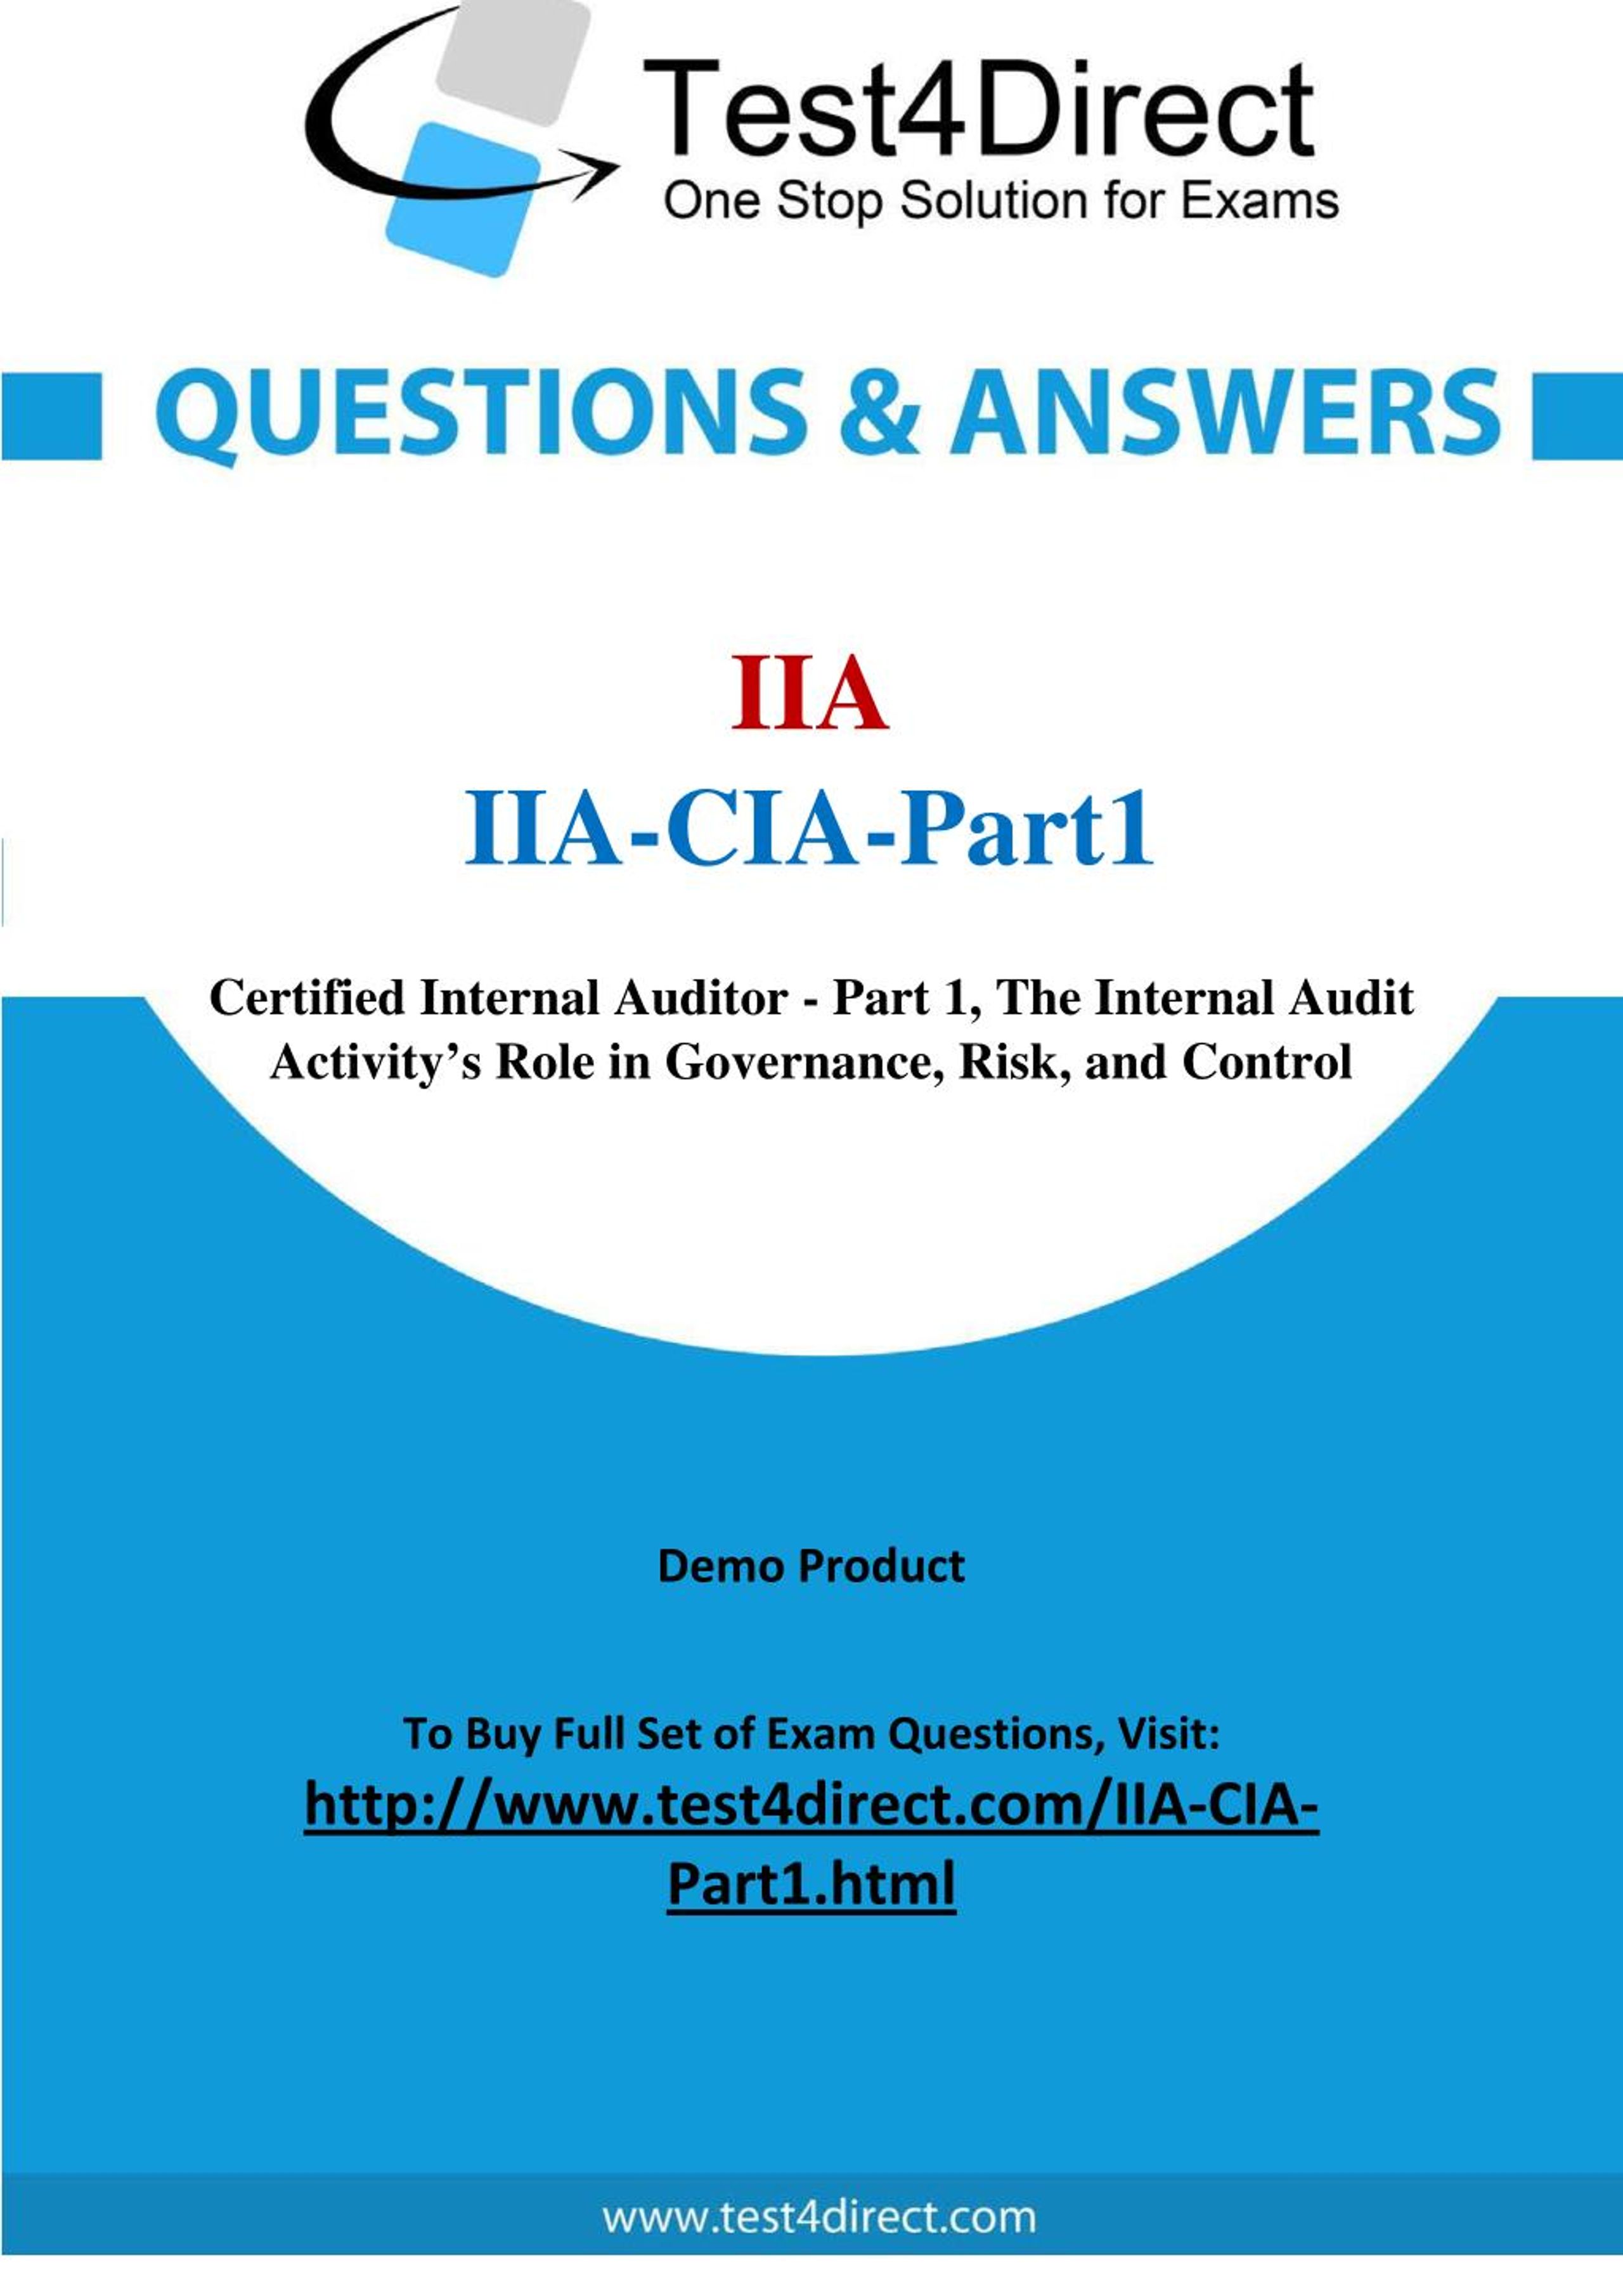 IIA-CIA-Part2 Quizfragen Und Antworten, IIA-CIA-Part2 Quizfragen Und Antworten